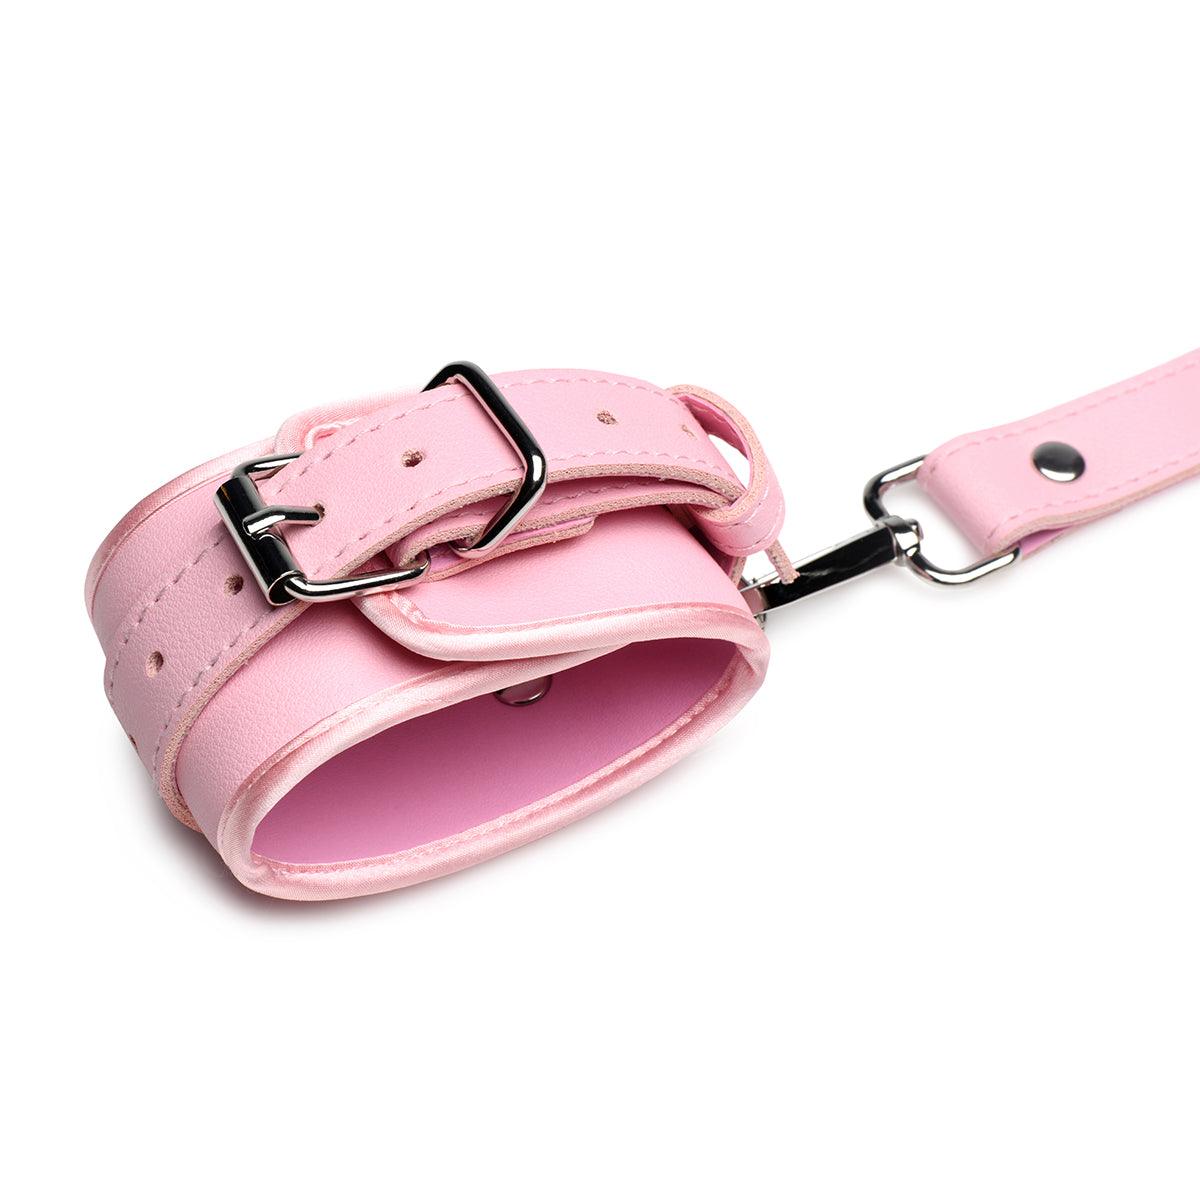 Bondage Harness with Bows M/L - Pink - shop enby